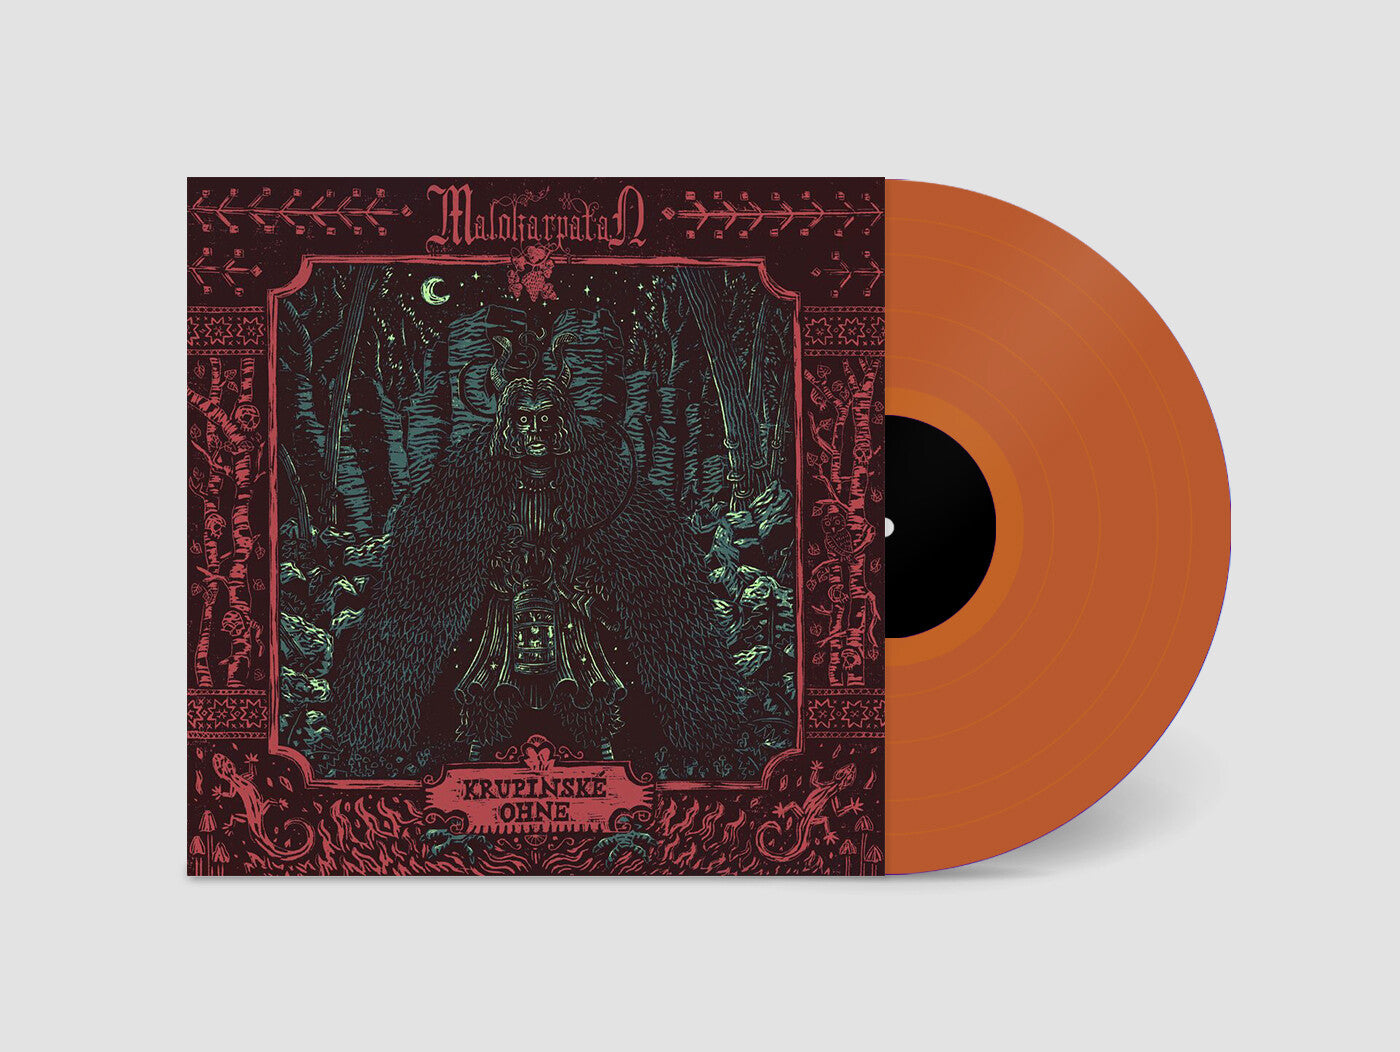 Malokarpatan – Krupinské Ohne (Orange Vinyl) LP gatefold 2nd pressing